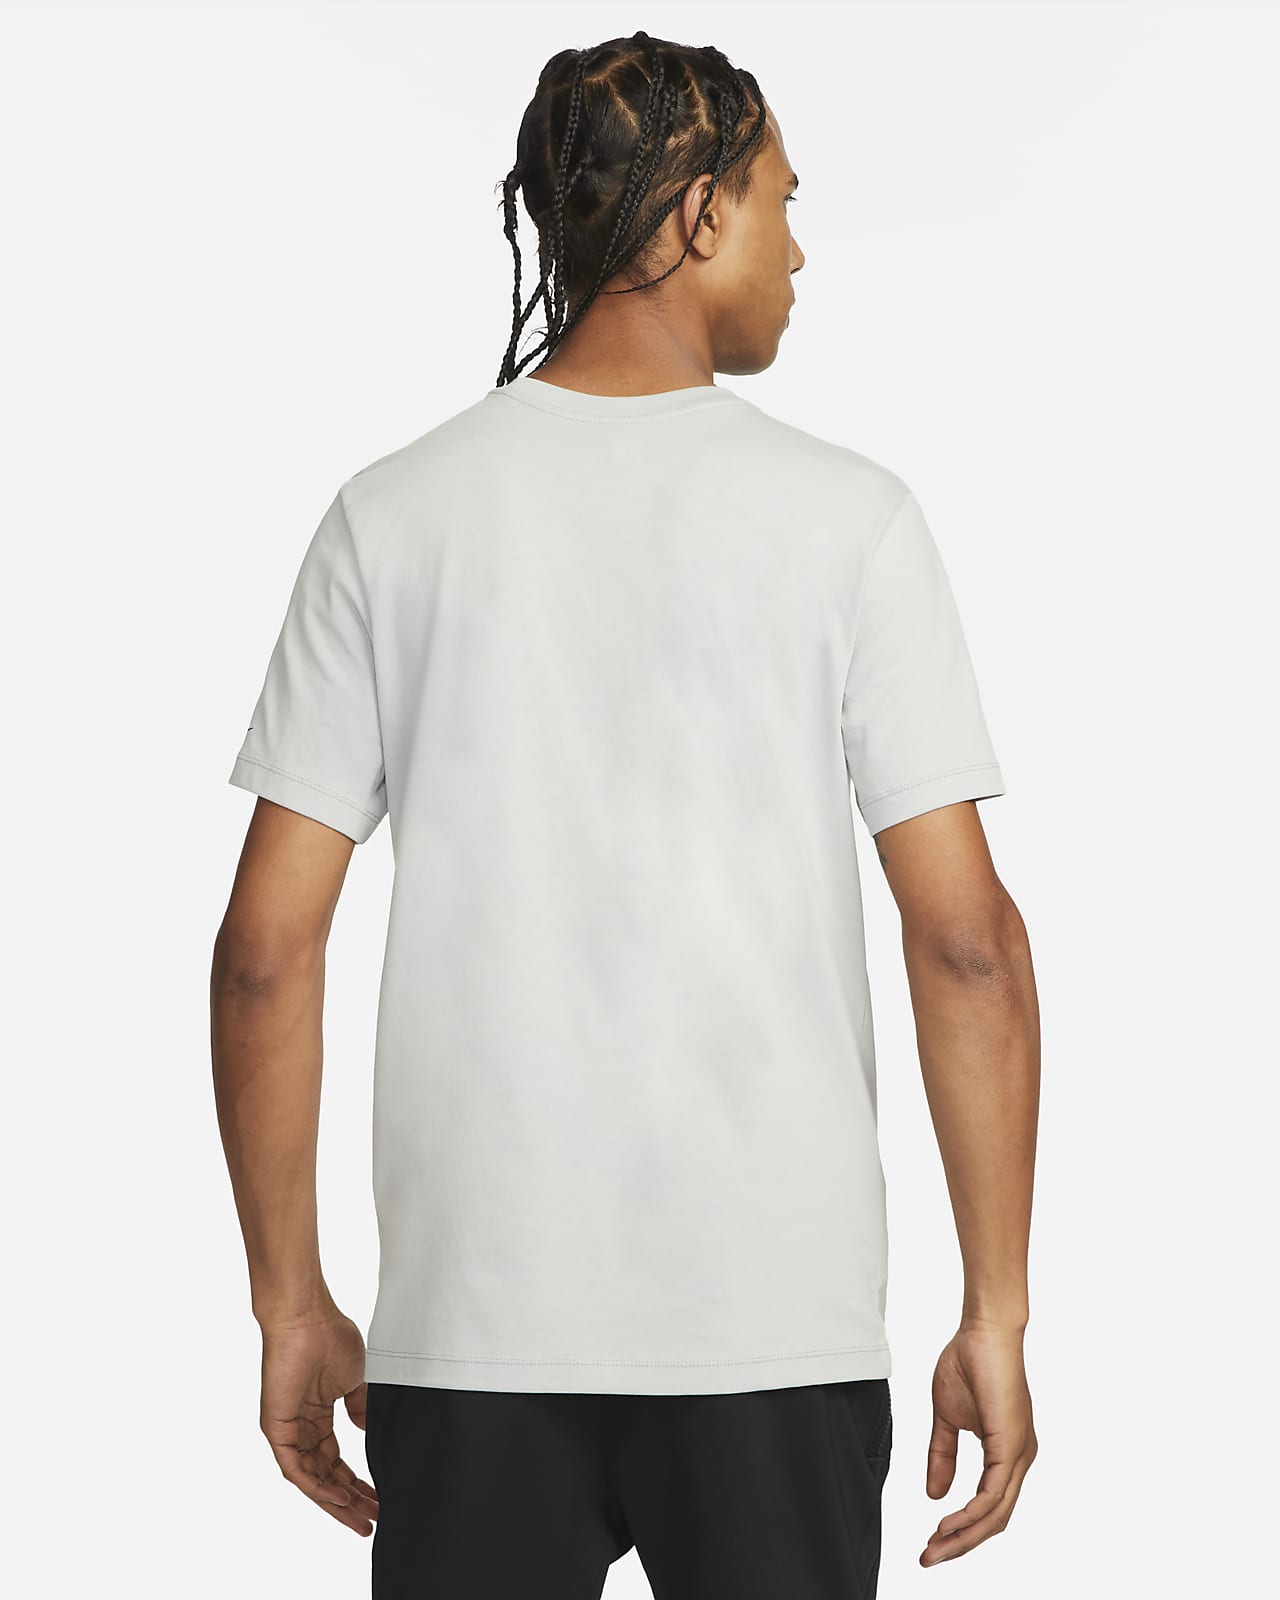 Nike Men's Ja Max90 Long-Sleeve T-Shirt in White, Size: Small | FN0807-100